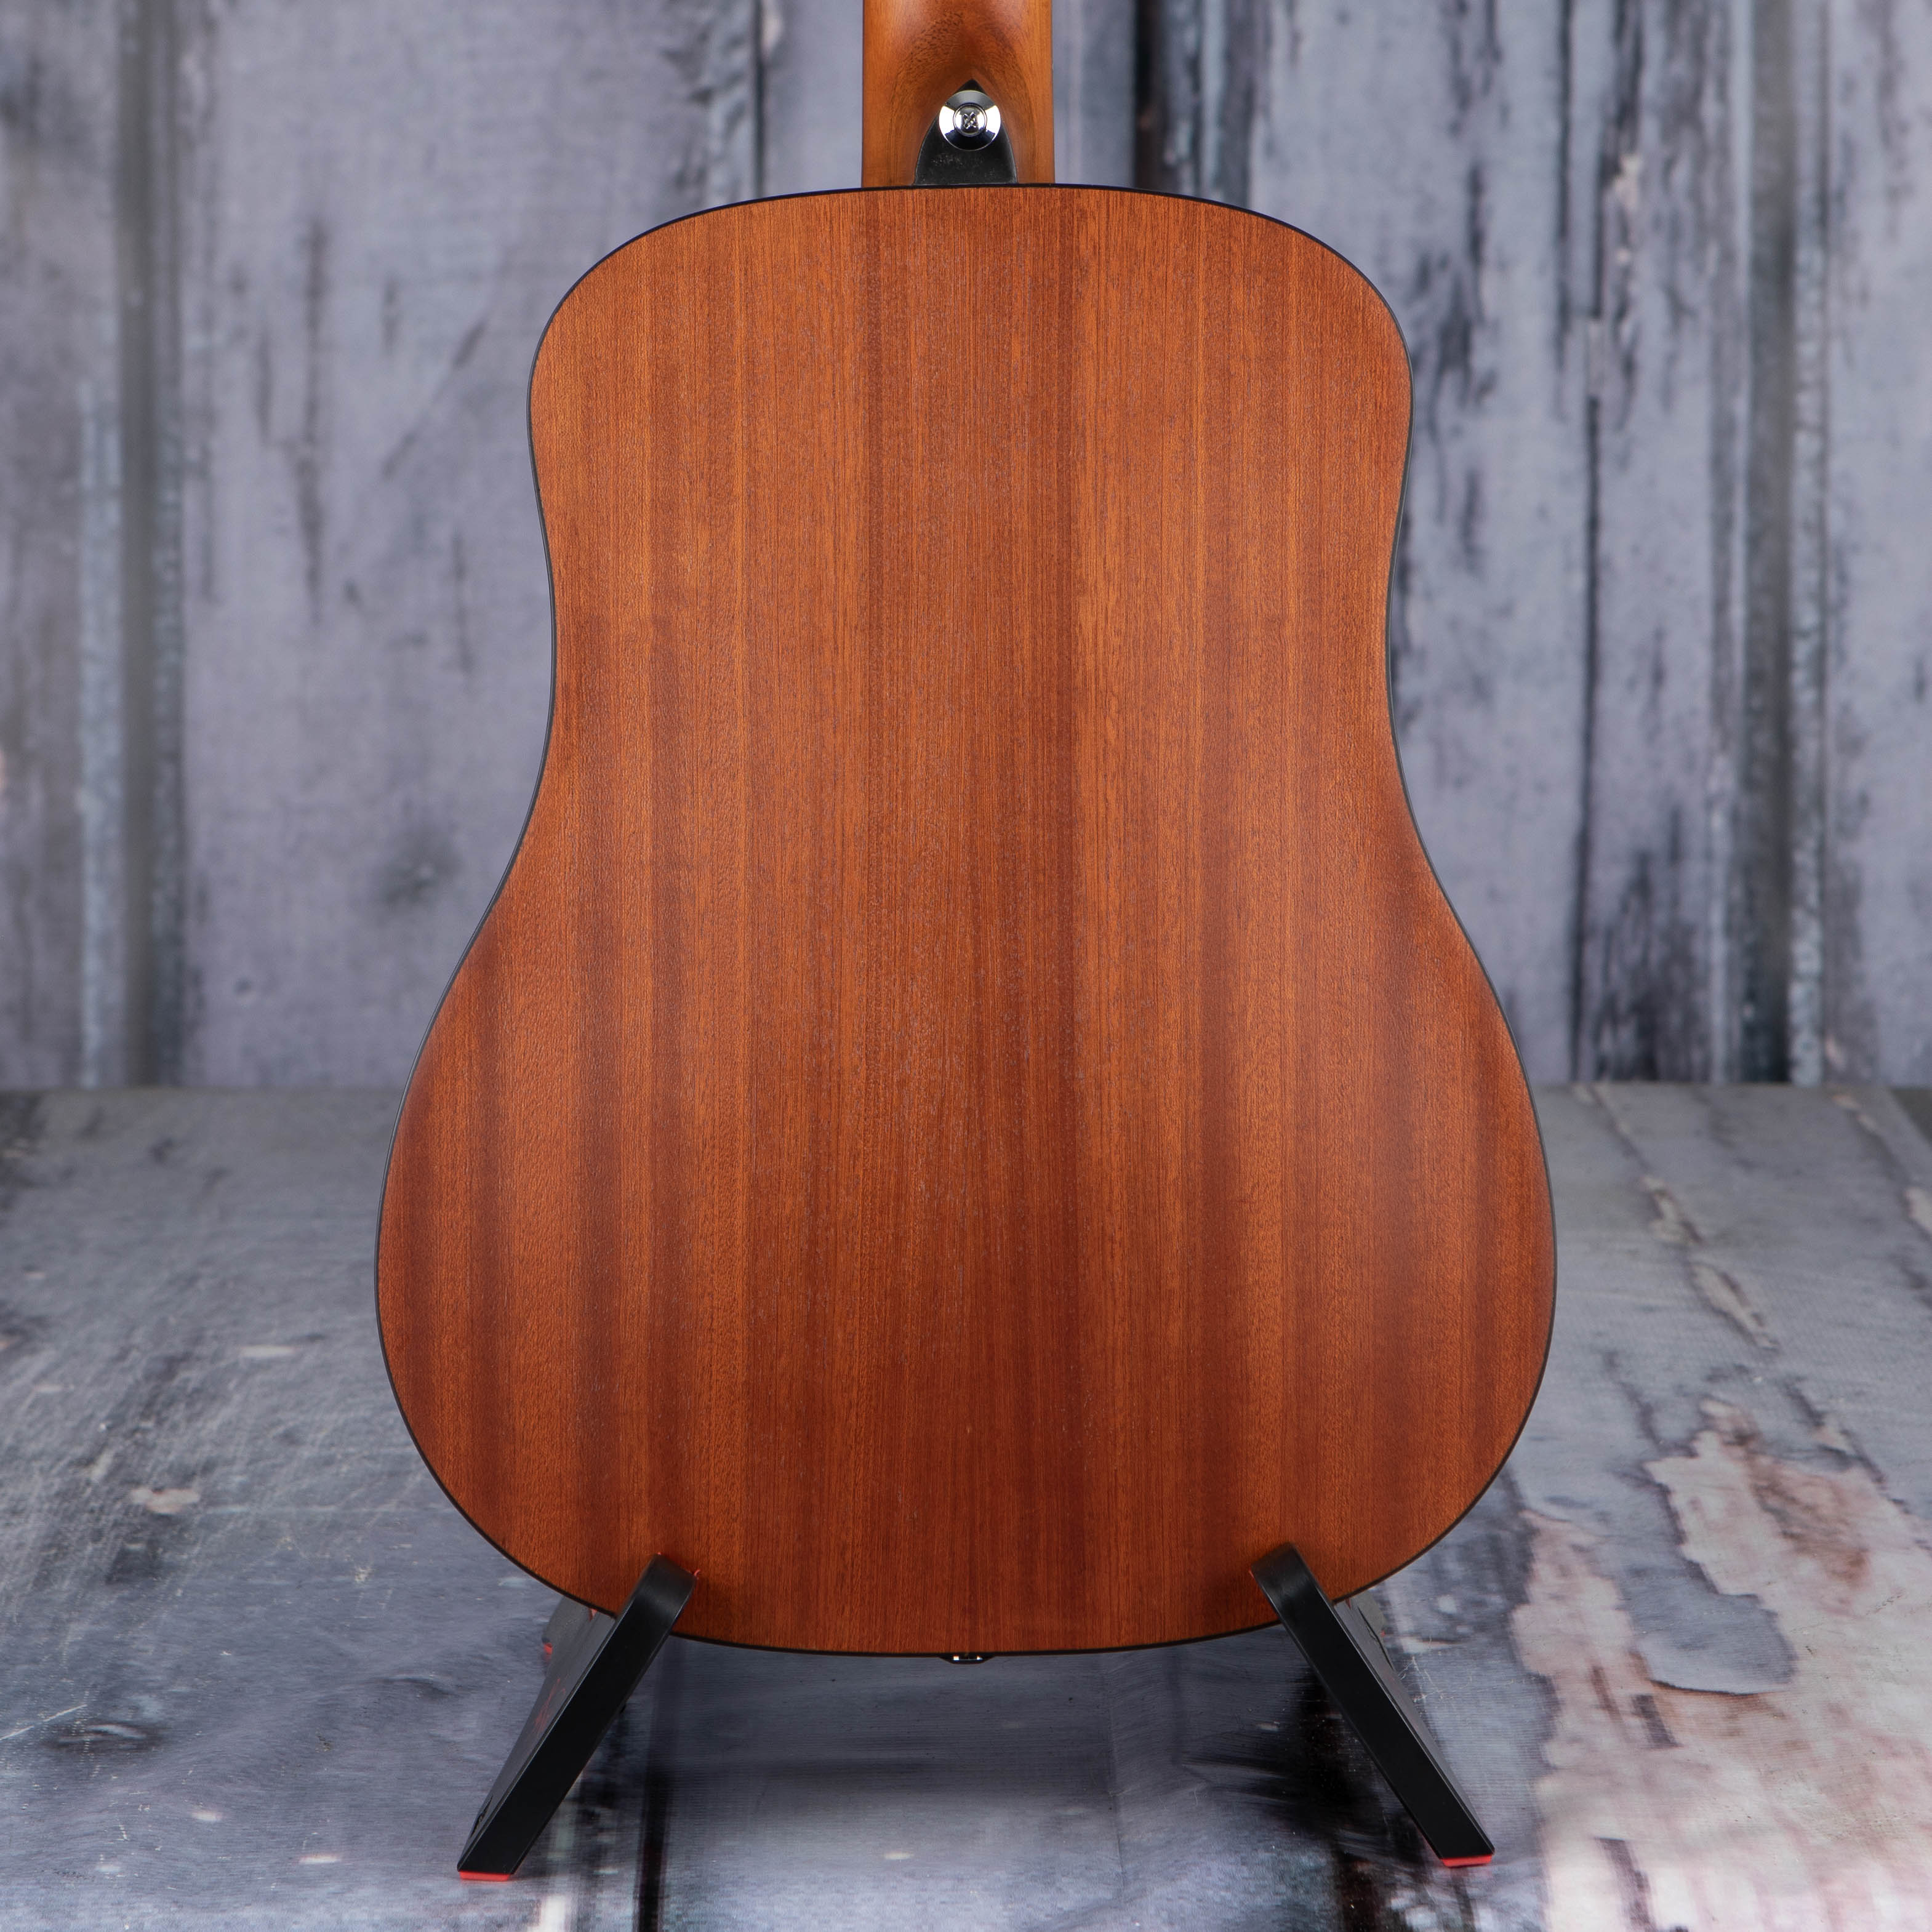 Ibanez PF2MHOPN 3/4 Size Acoustic Guitar, Open Pore Natural, back closeup